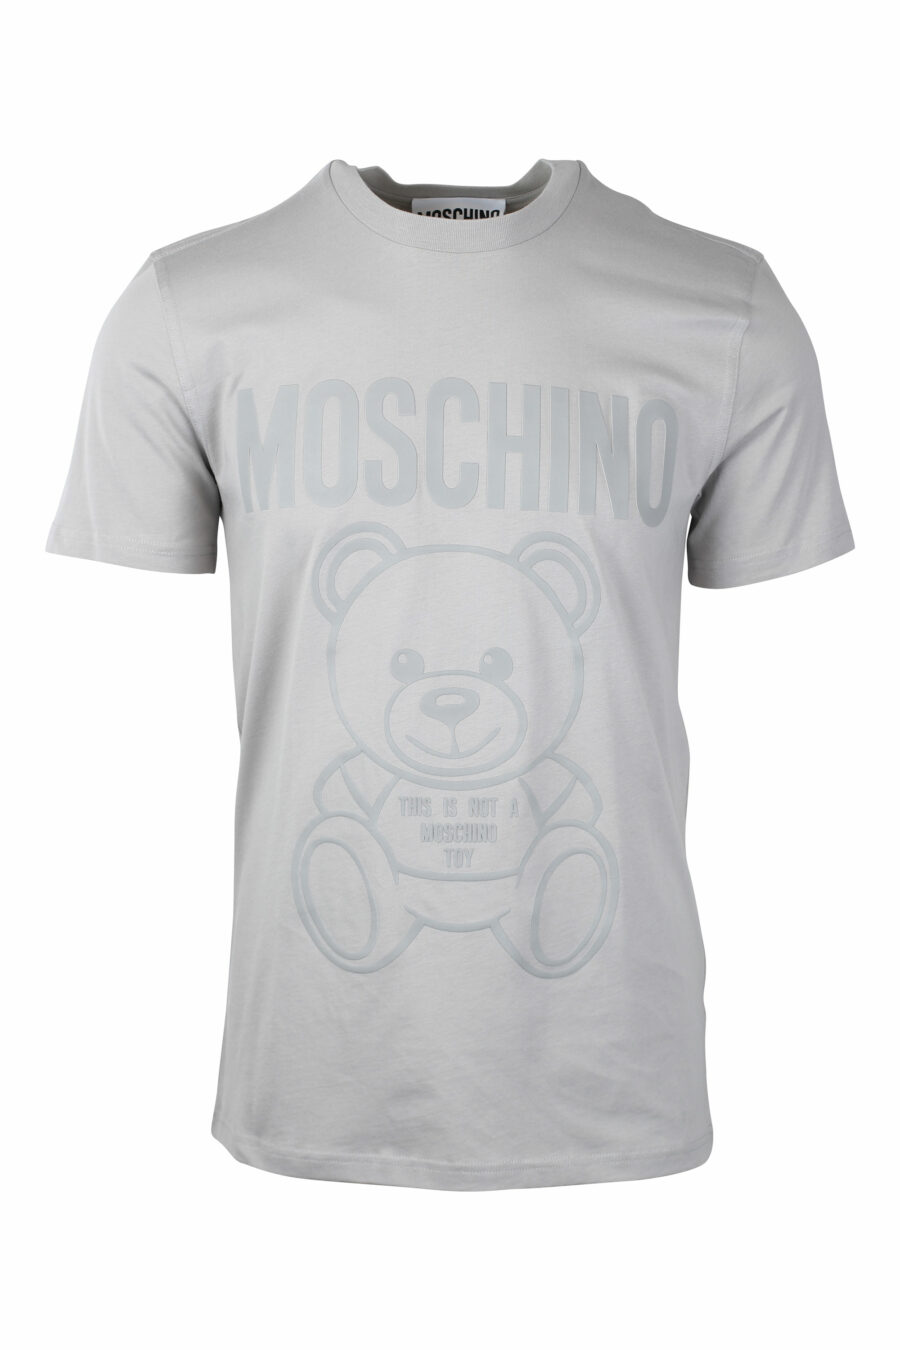 Graues T-Shirt mit monochromem Bären-Maxilogo - IMG 1397